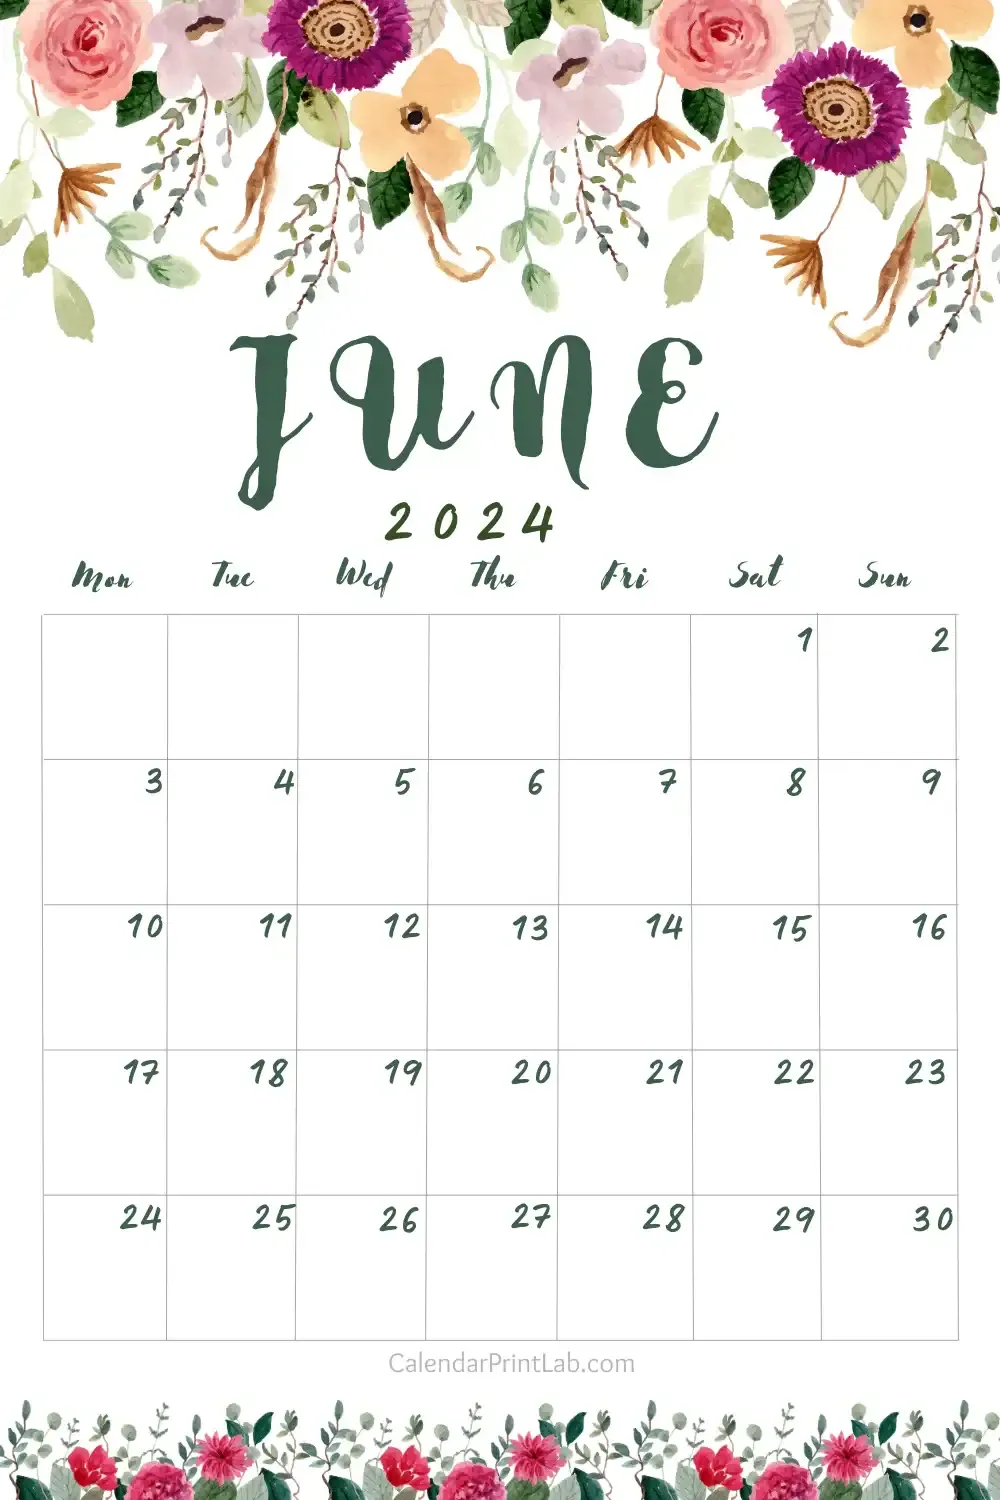 Download June 2024 Floral Calendar